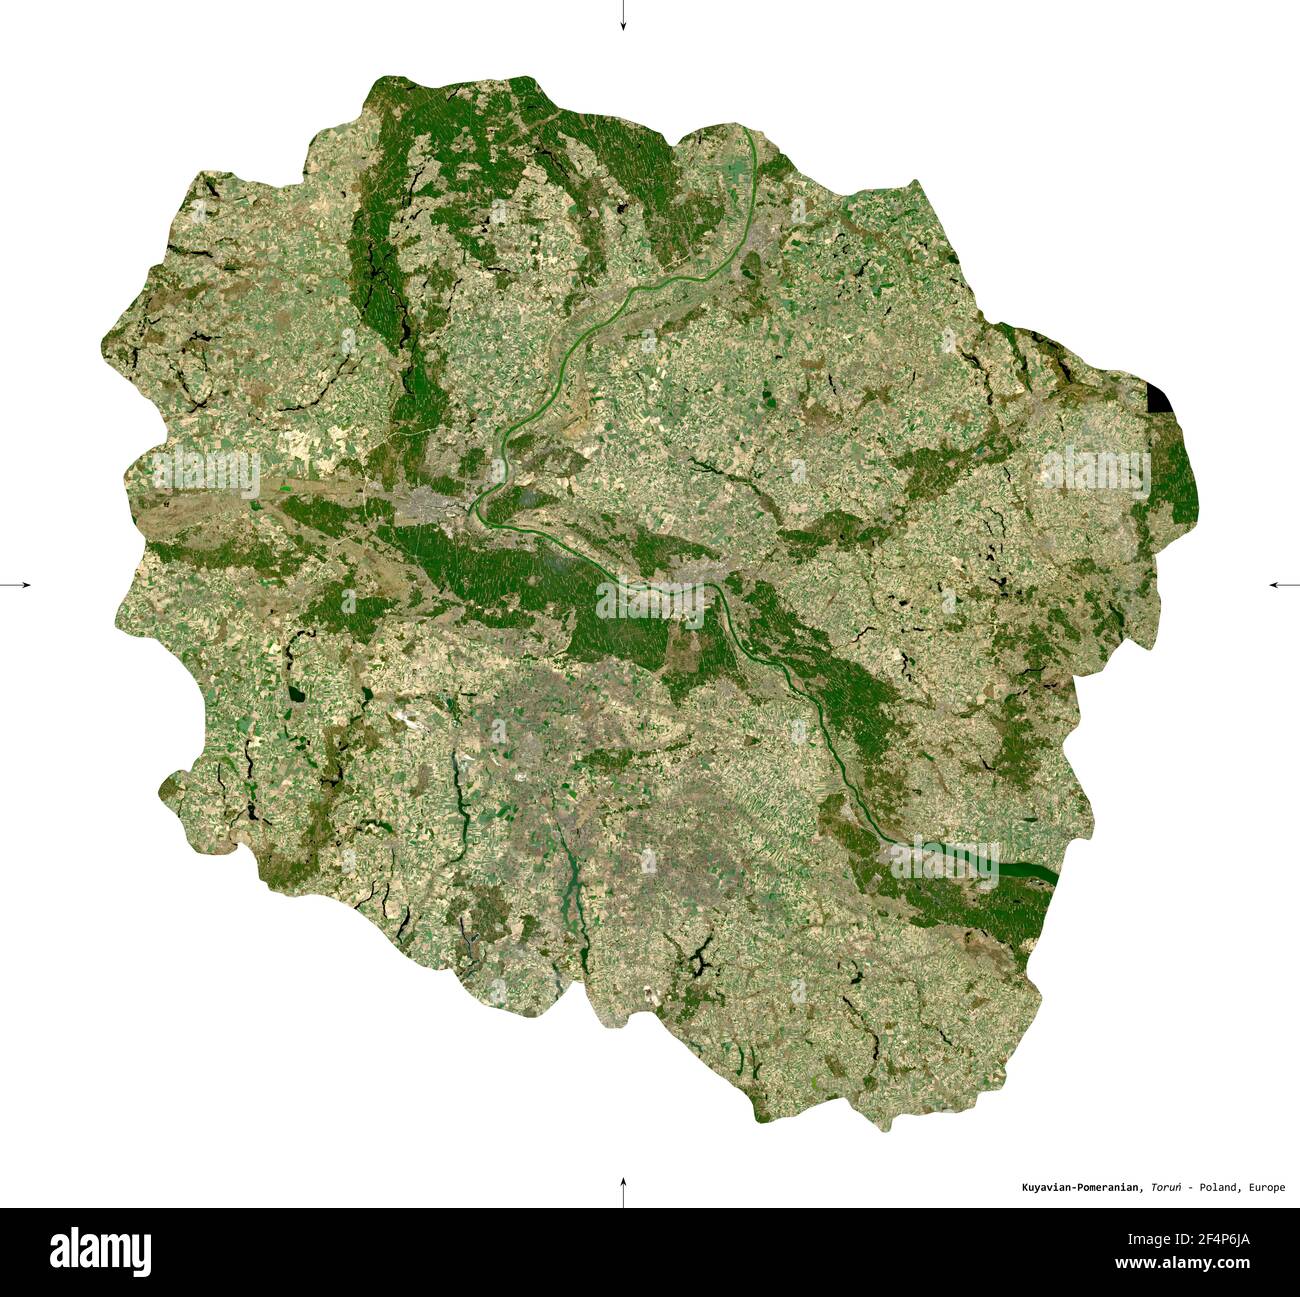 Kuyavian-Pomeranian, voivodeship|province of Poland. Sentinel-2 satellite  imagery. Shape isolated on white. Description, location of the capital.  Cont Stock Photo - Alamy